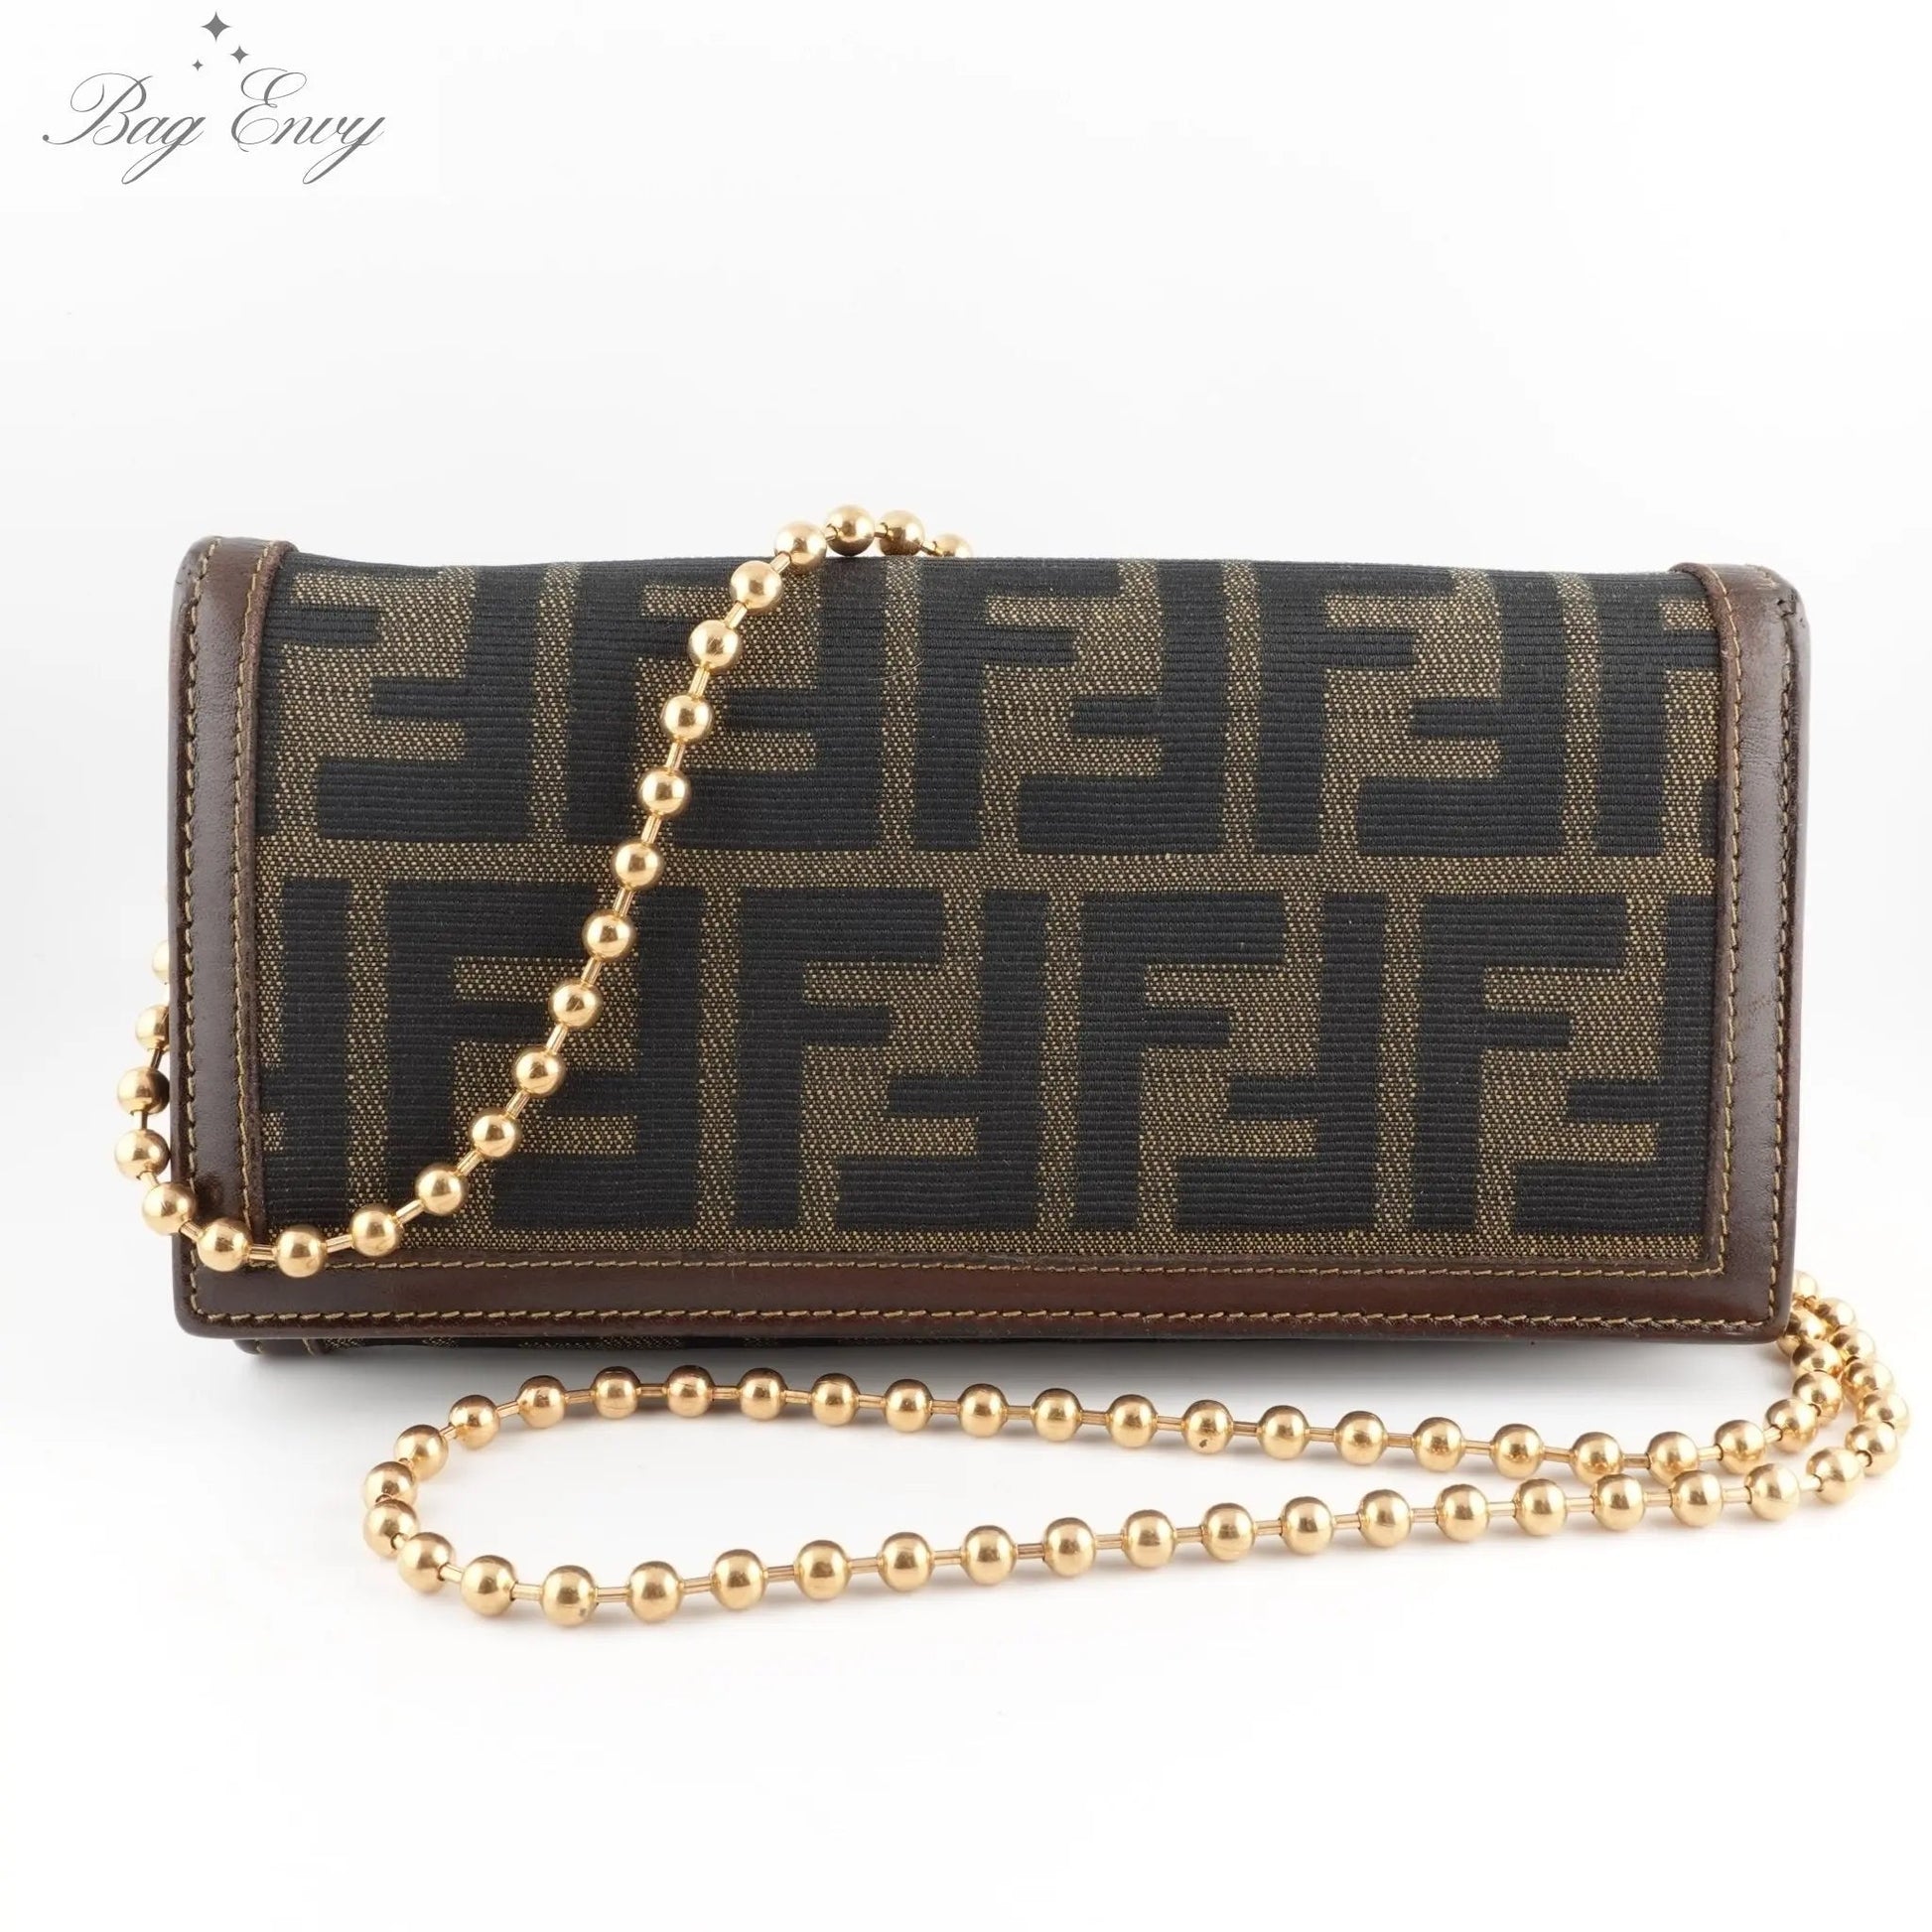 FENDI Zucca Wallet on Chain - Bag Envy